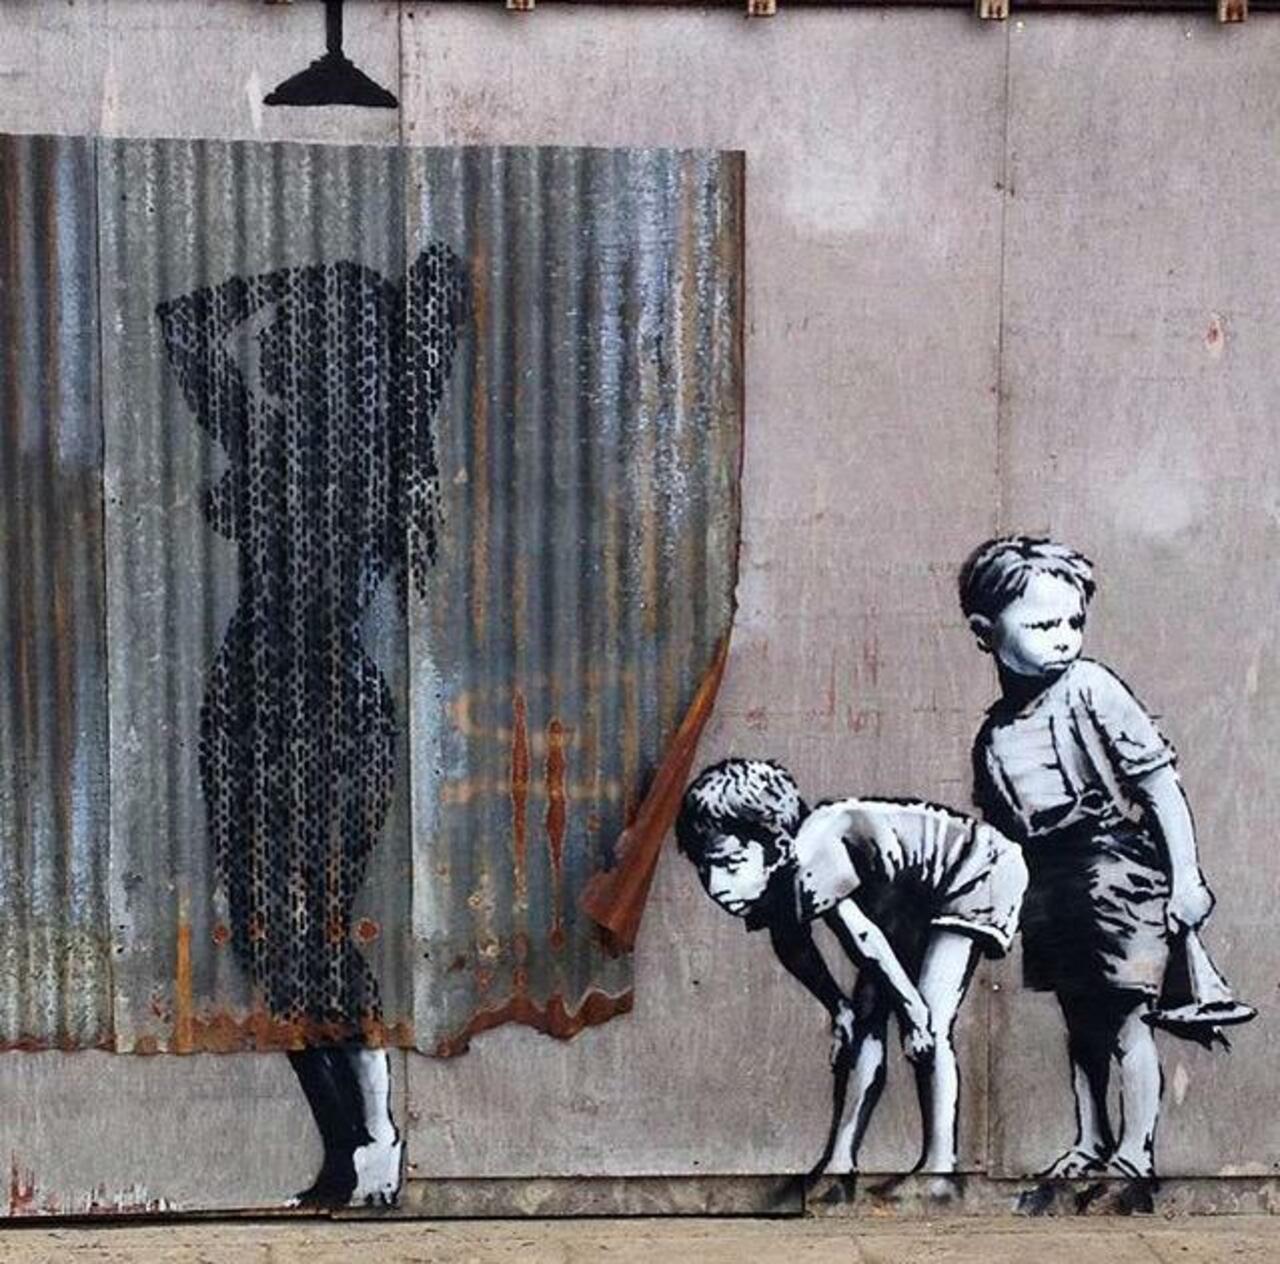 #Banksy for #Dismaland 
#streetart #banksy #art #graffiti https://t.co/2q7m8Q0wGf
Via @GoogleStreetArt